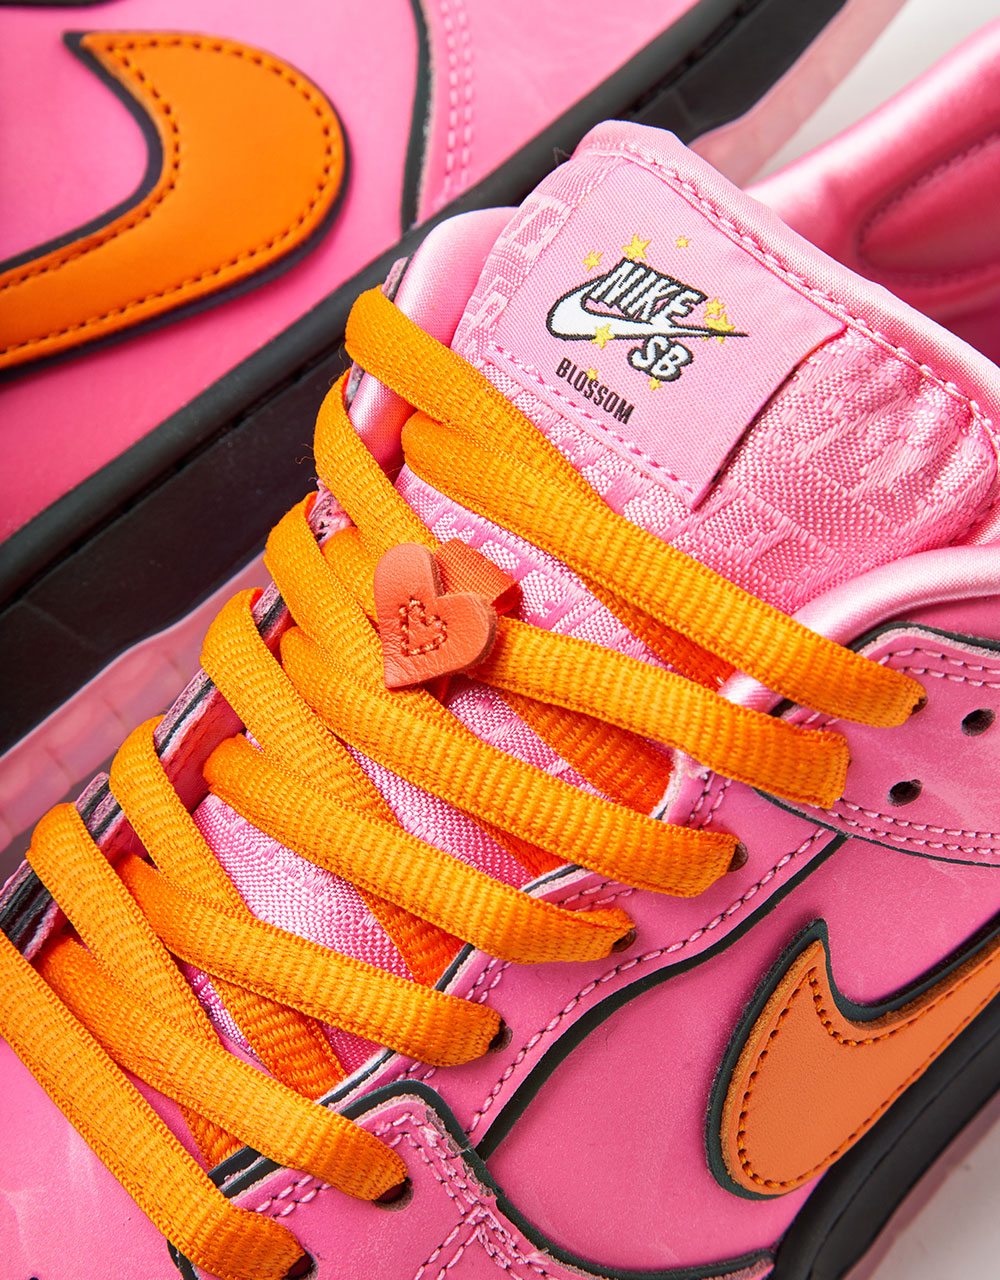 Nike SB x Powerpuff Girls 'Blossom' Dunk Low Pro QS Skate Shoes - Lotus Pink/Digital Pink-Med Soft Pink